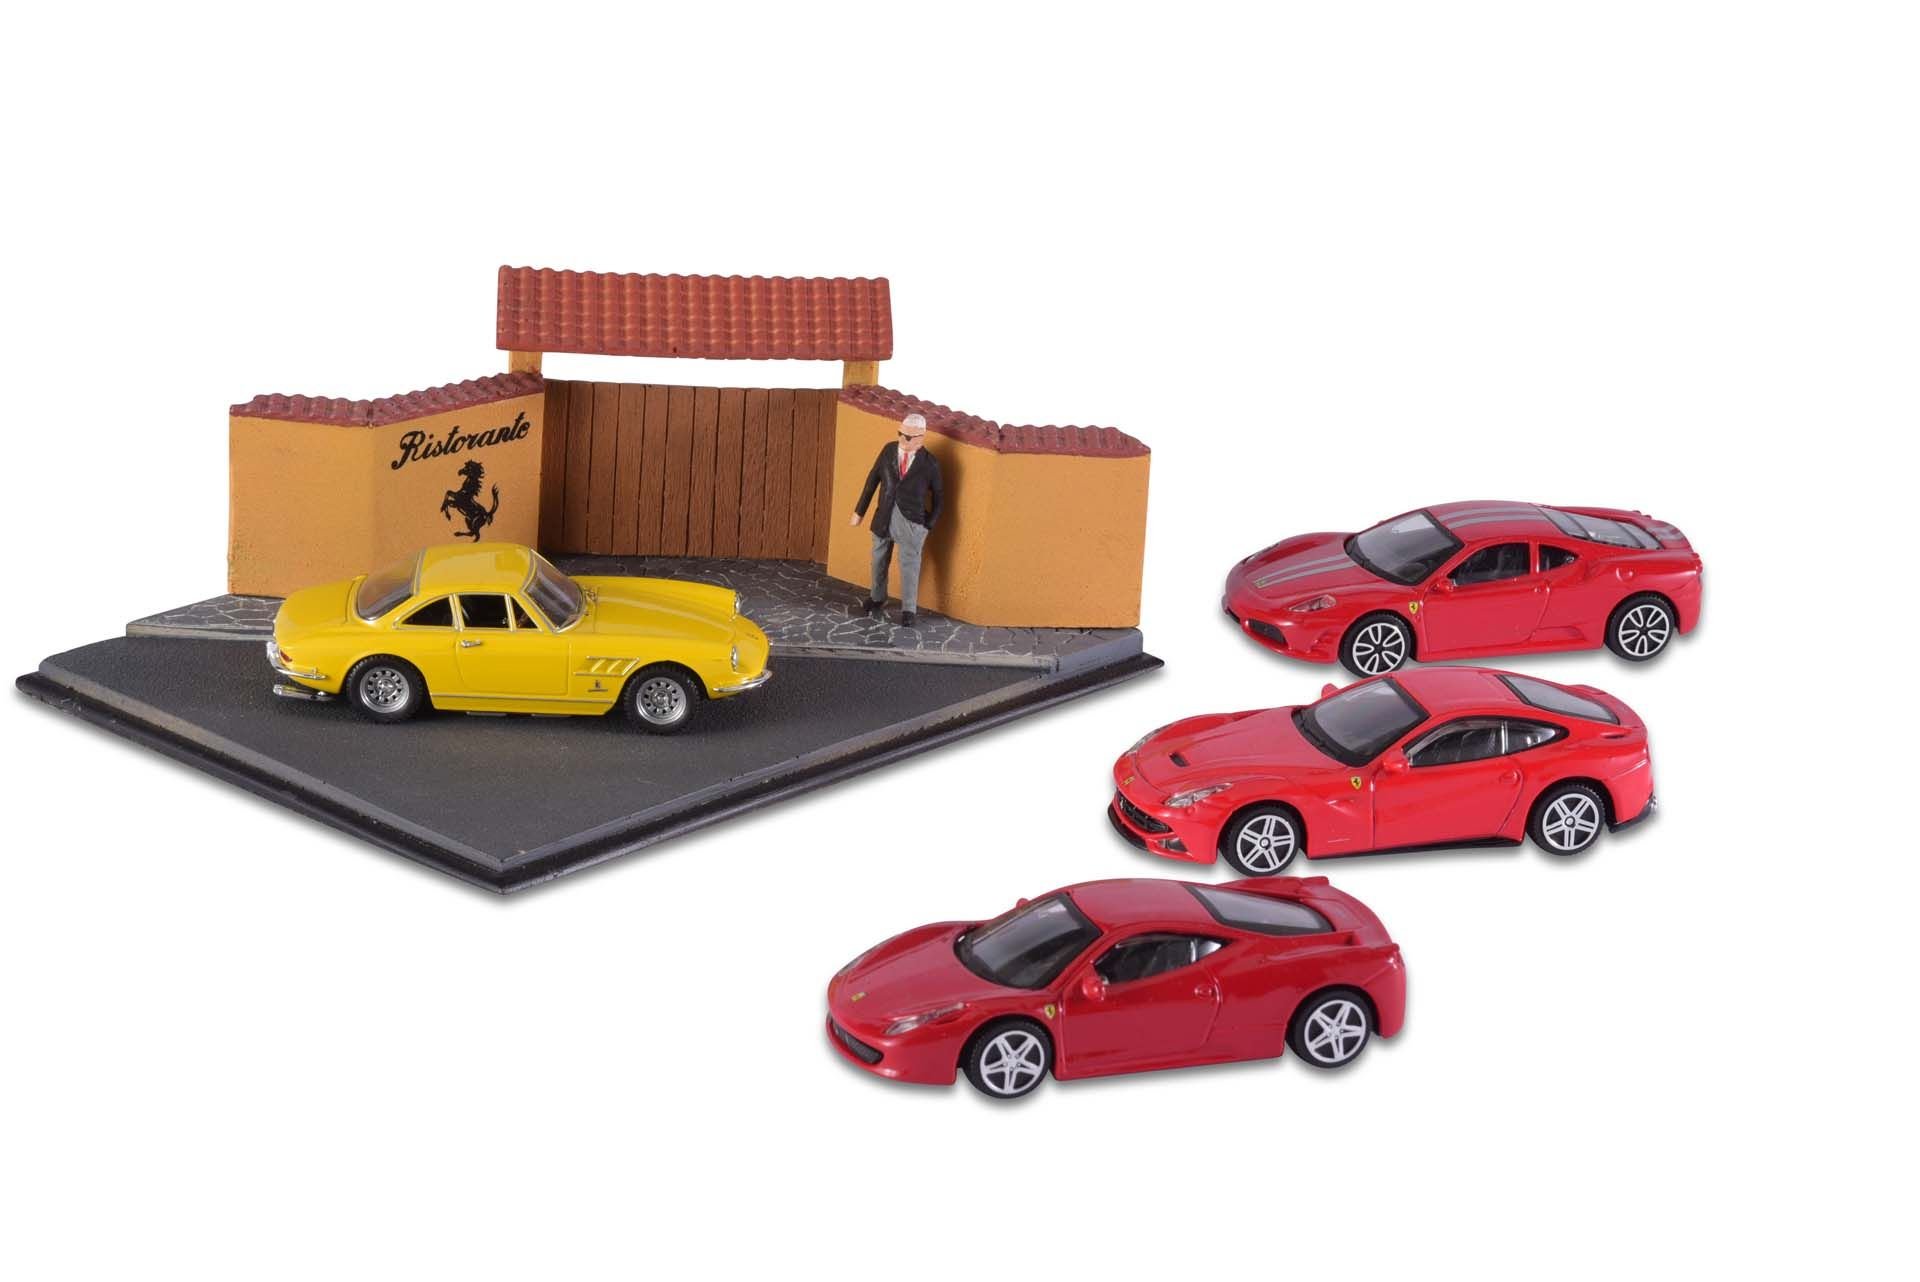 For Sale Group of Ferrari Models including Enzo Ferrari display